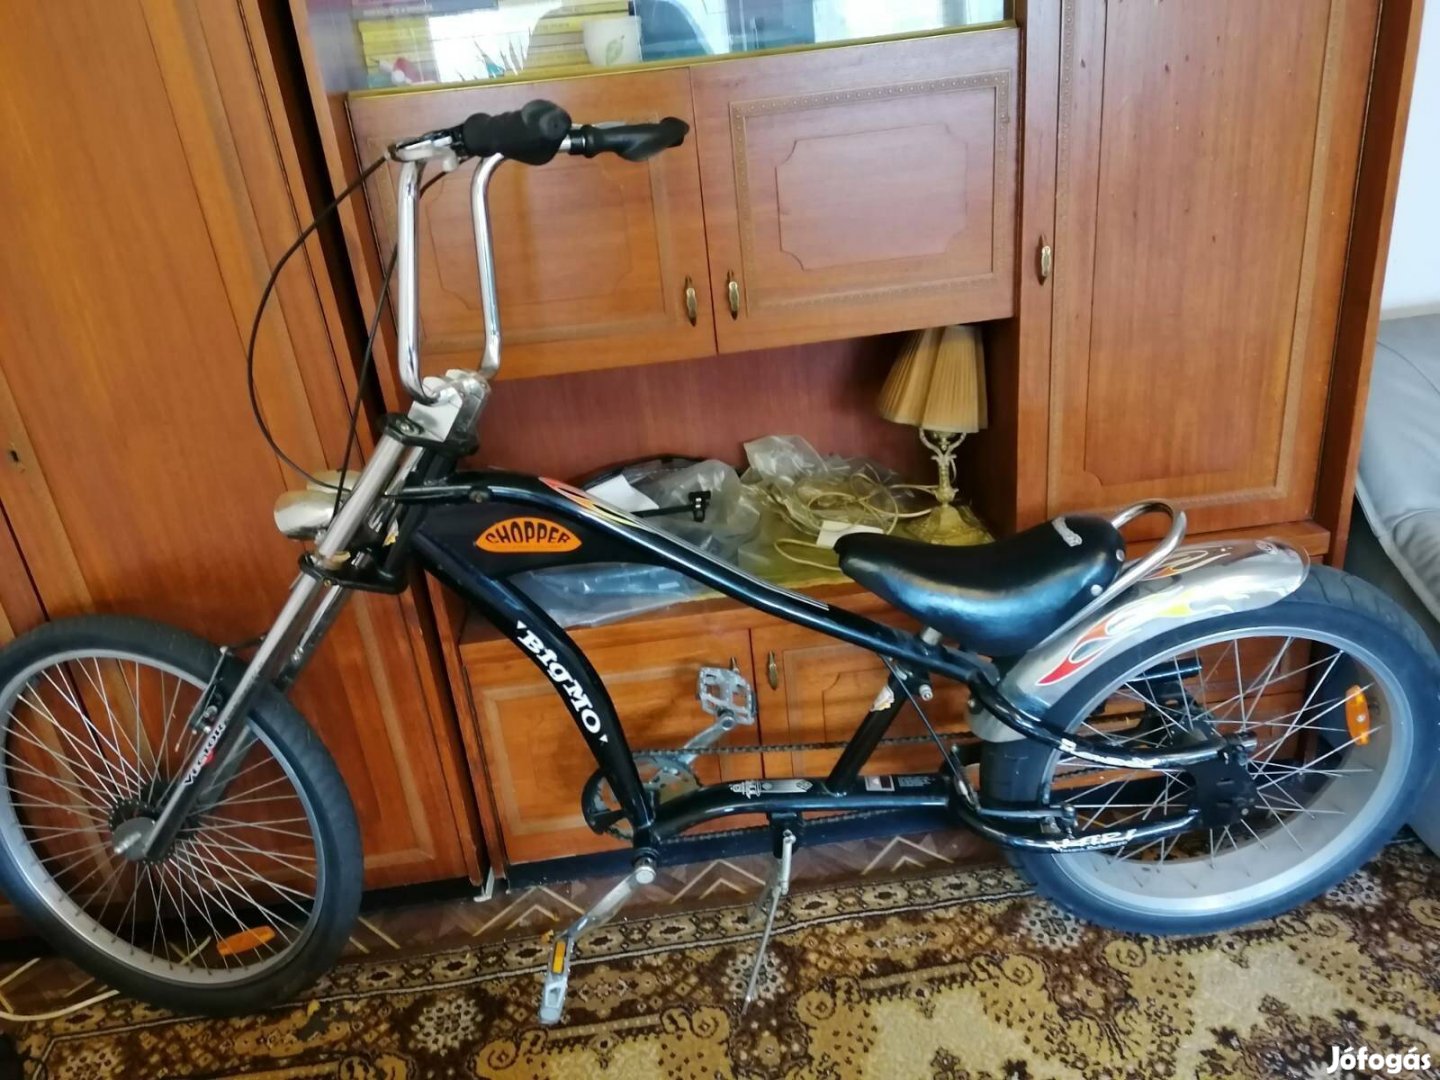 Bigmo Chopper Lowrider bicikli (Eredeti, nem olcsó utánzat)